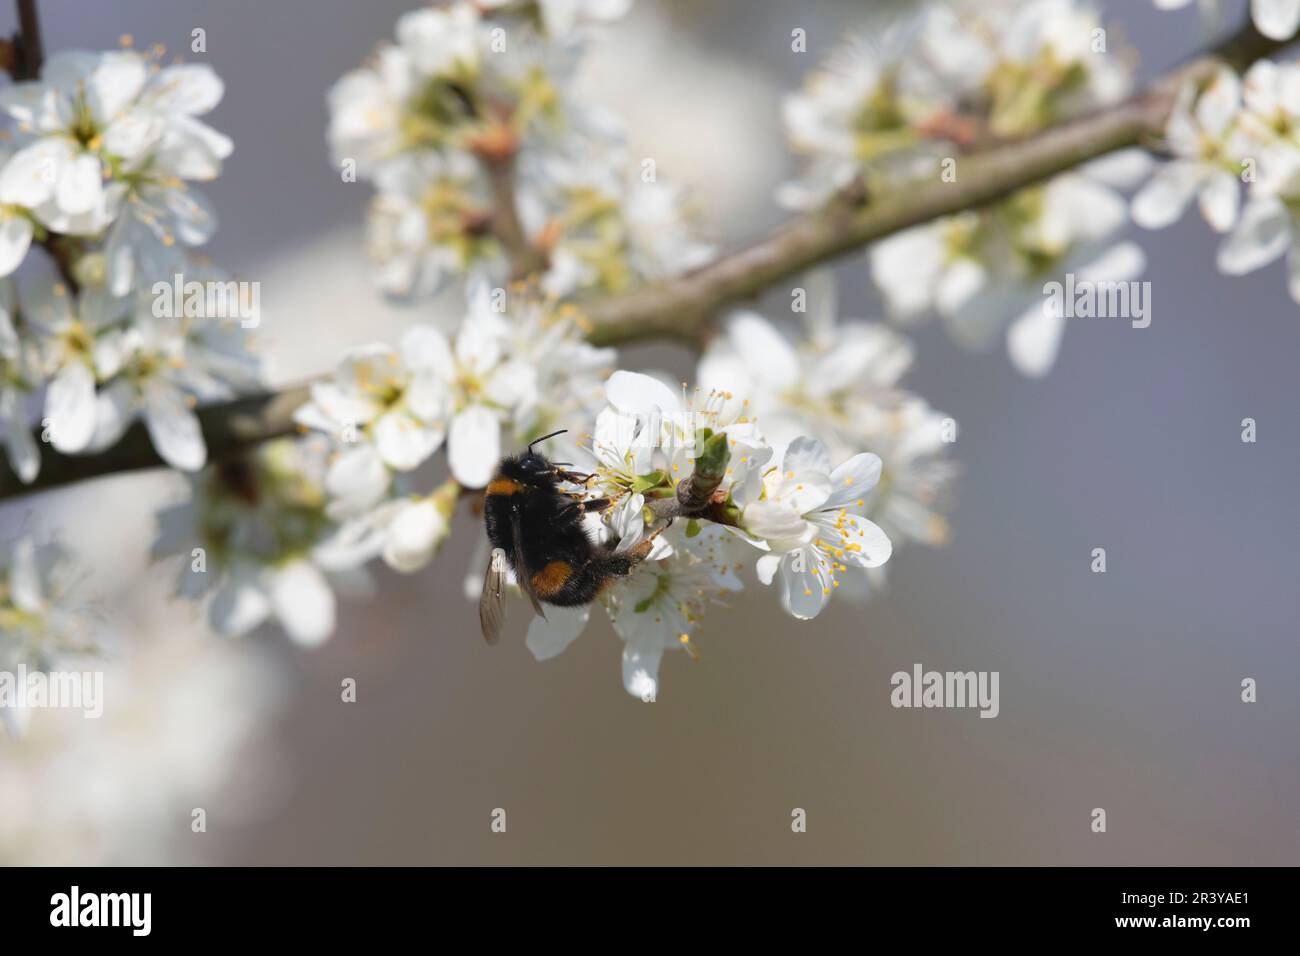 A Buff-tailed Bumblebee (Bombus Terrestris) Foraging on Damson Tree Blossom (Prunus Insititia) in April Sunshine Stock Photo